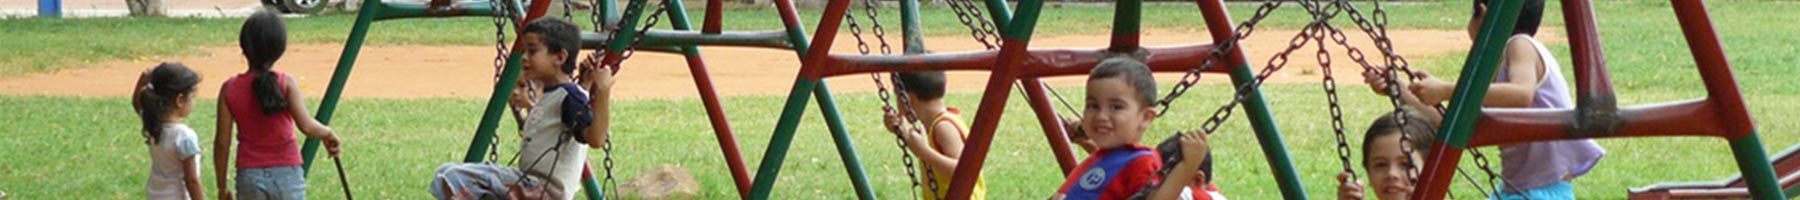 Paraguayan children on swings in park